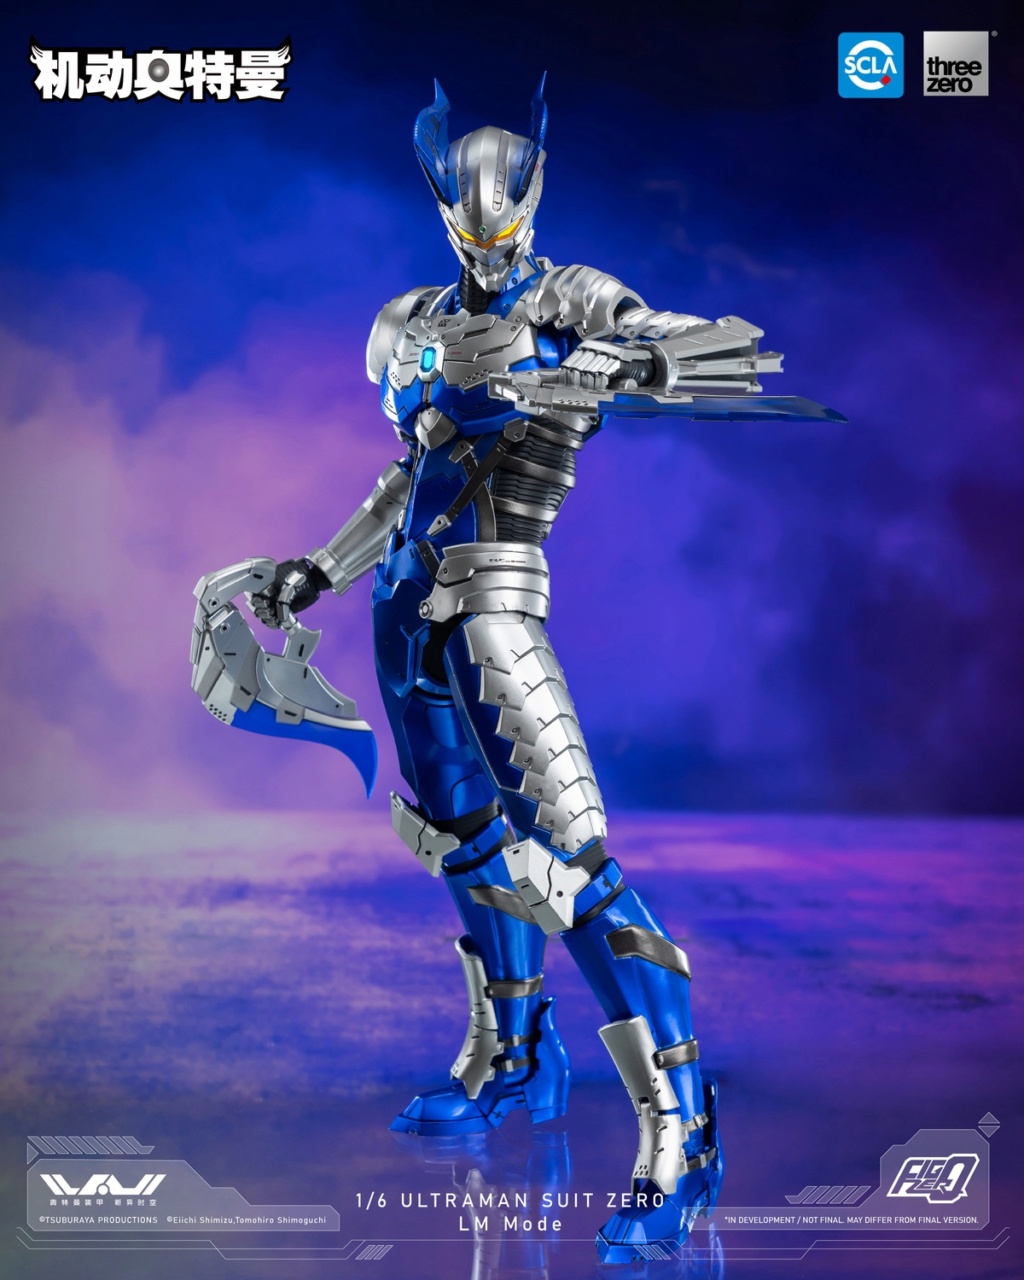 newproduct - NEW PRODUCT: Threezero: FigZero 1/6 Ultraman Suit Zero - LM Mode action figure 17251810